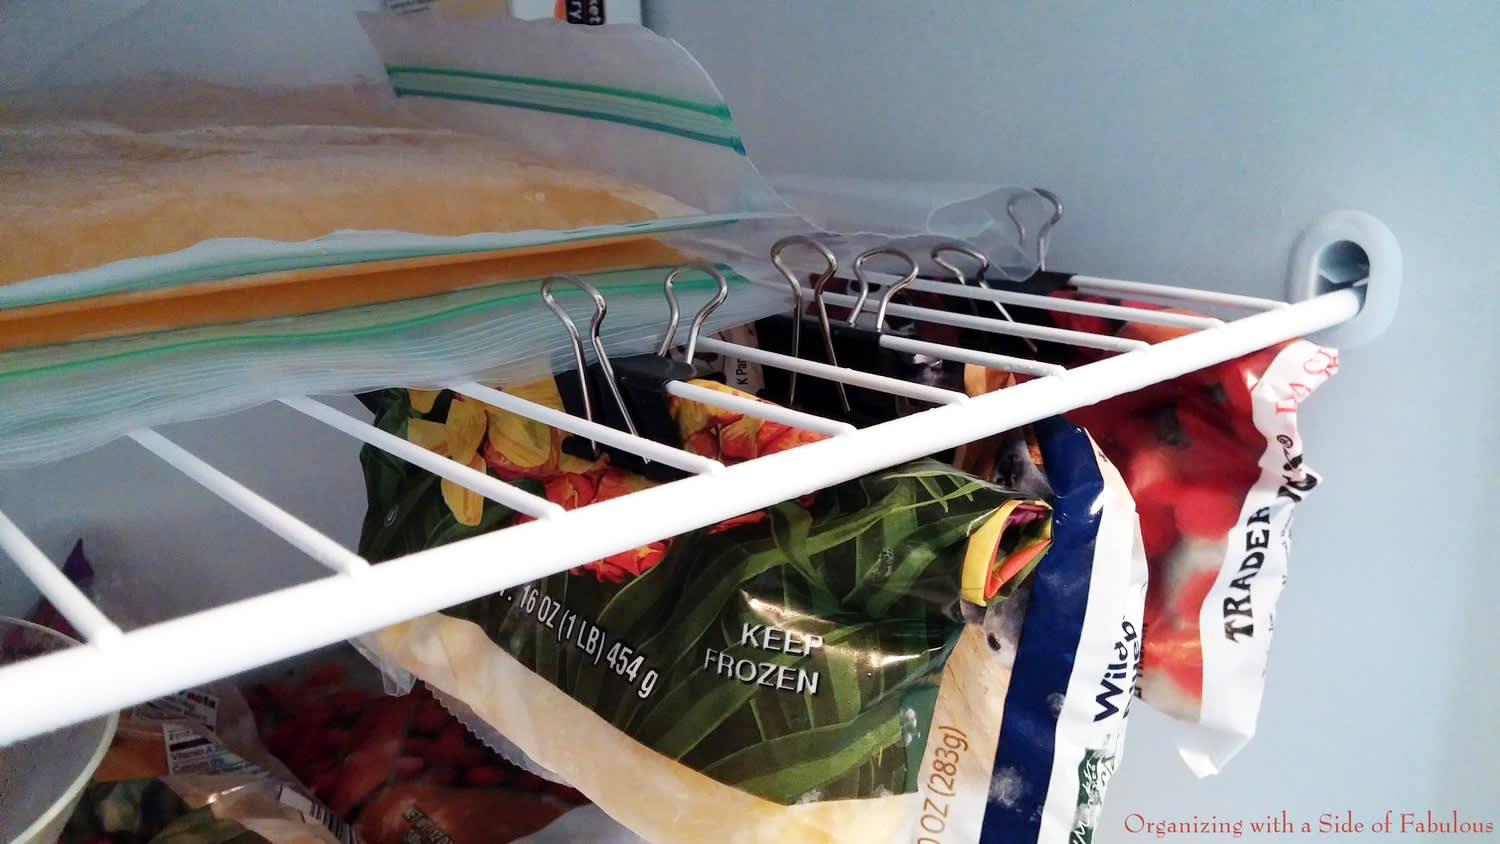 Refrigerator Organizing Hacks - Space-Saving Tricks For a Tiny Fridge